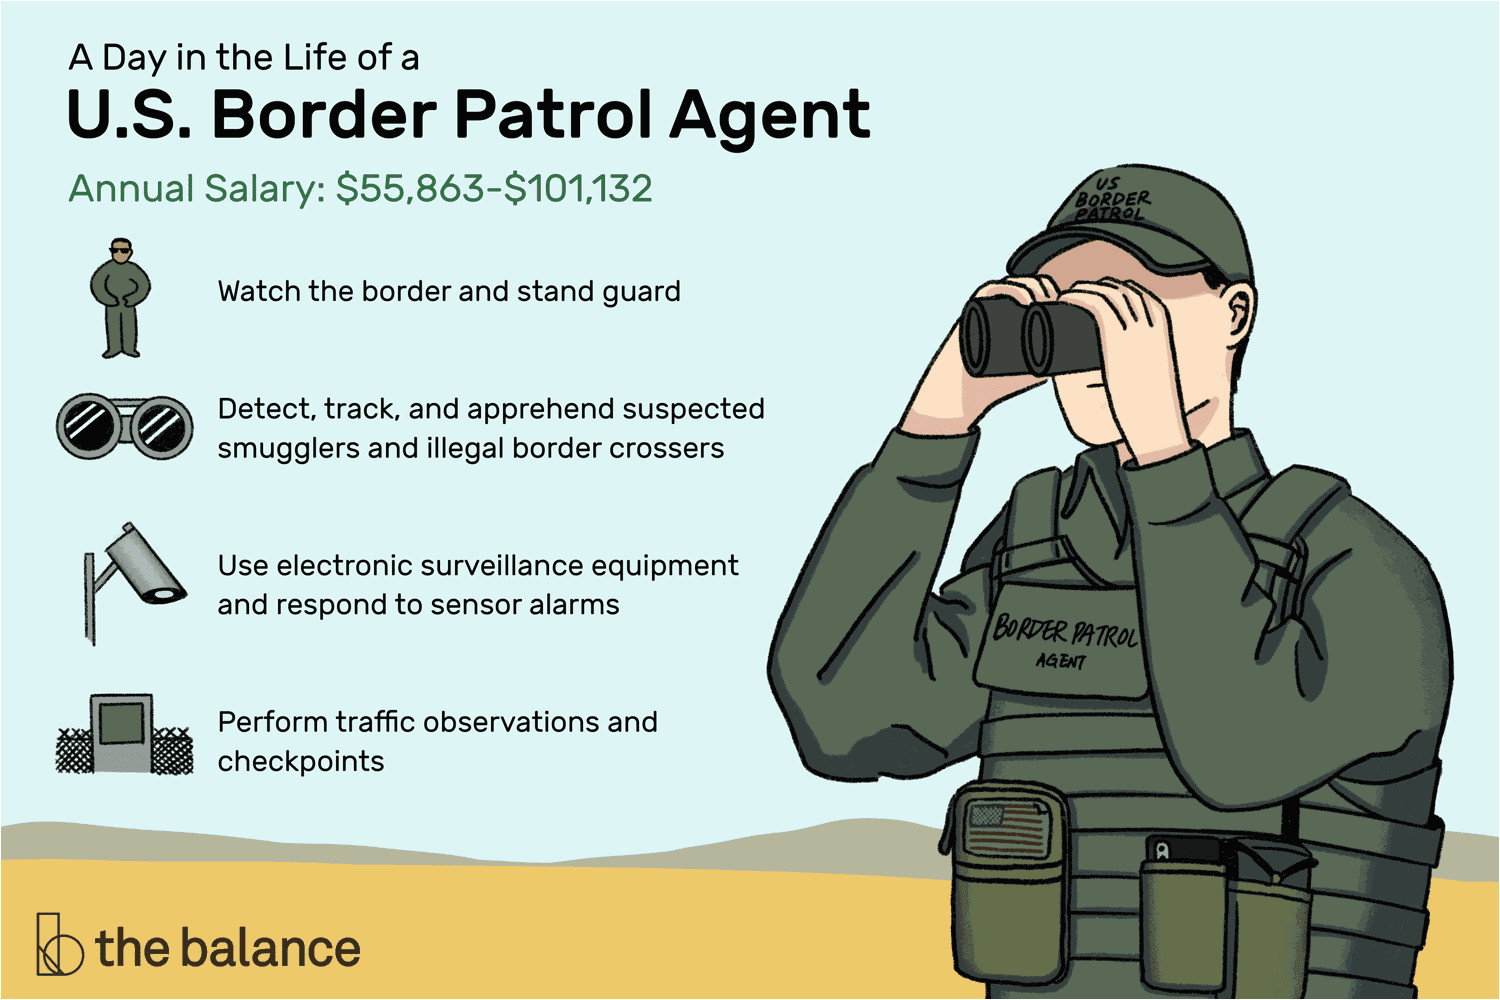 Border patrol compilation pic